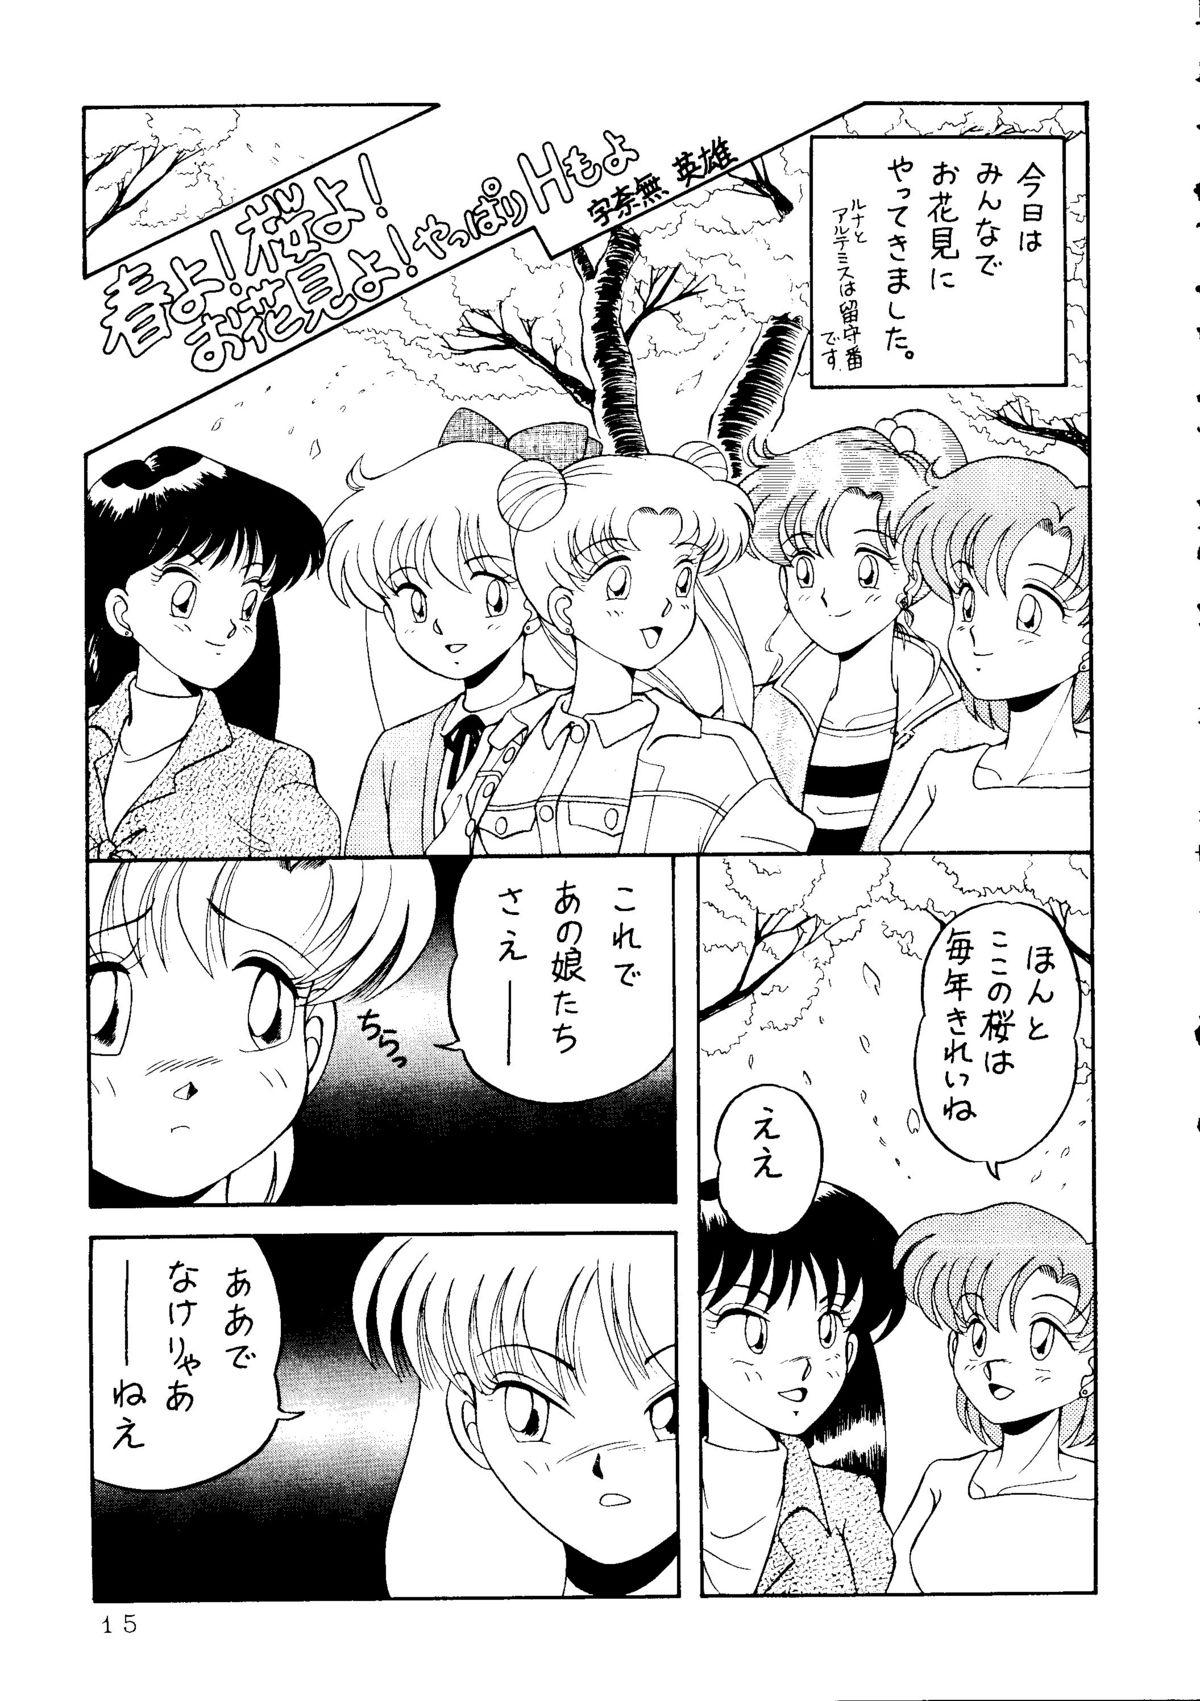 Peluda MAKE-UP R - Sailor moon Mujer - Page 12